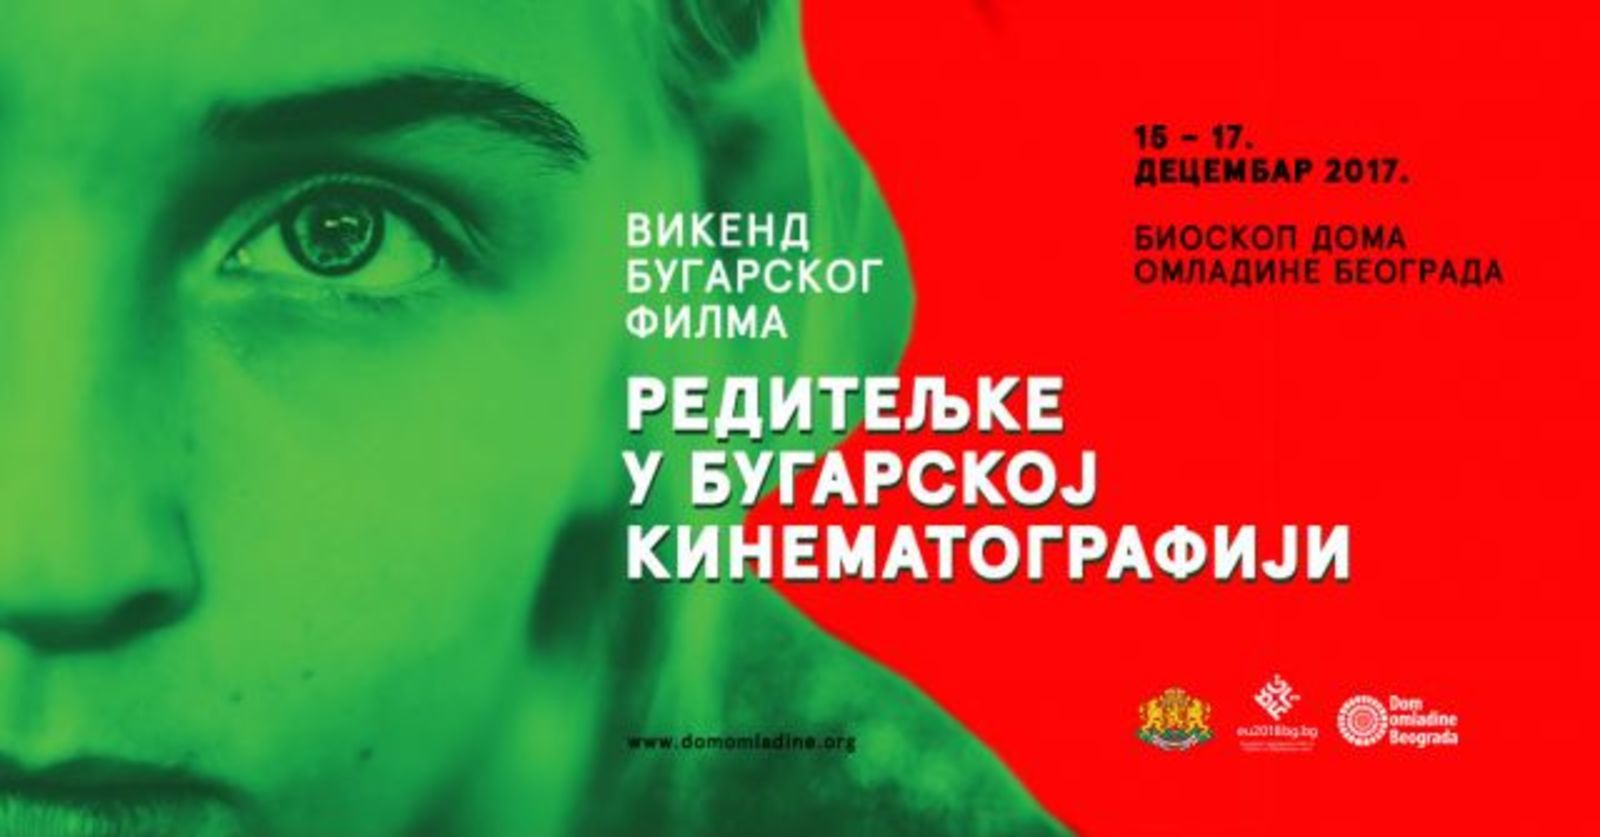 Days of Bulgarian Cinema in Belgrade from December 15 to 17 2017